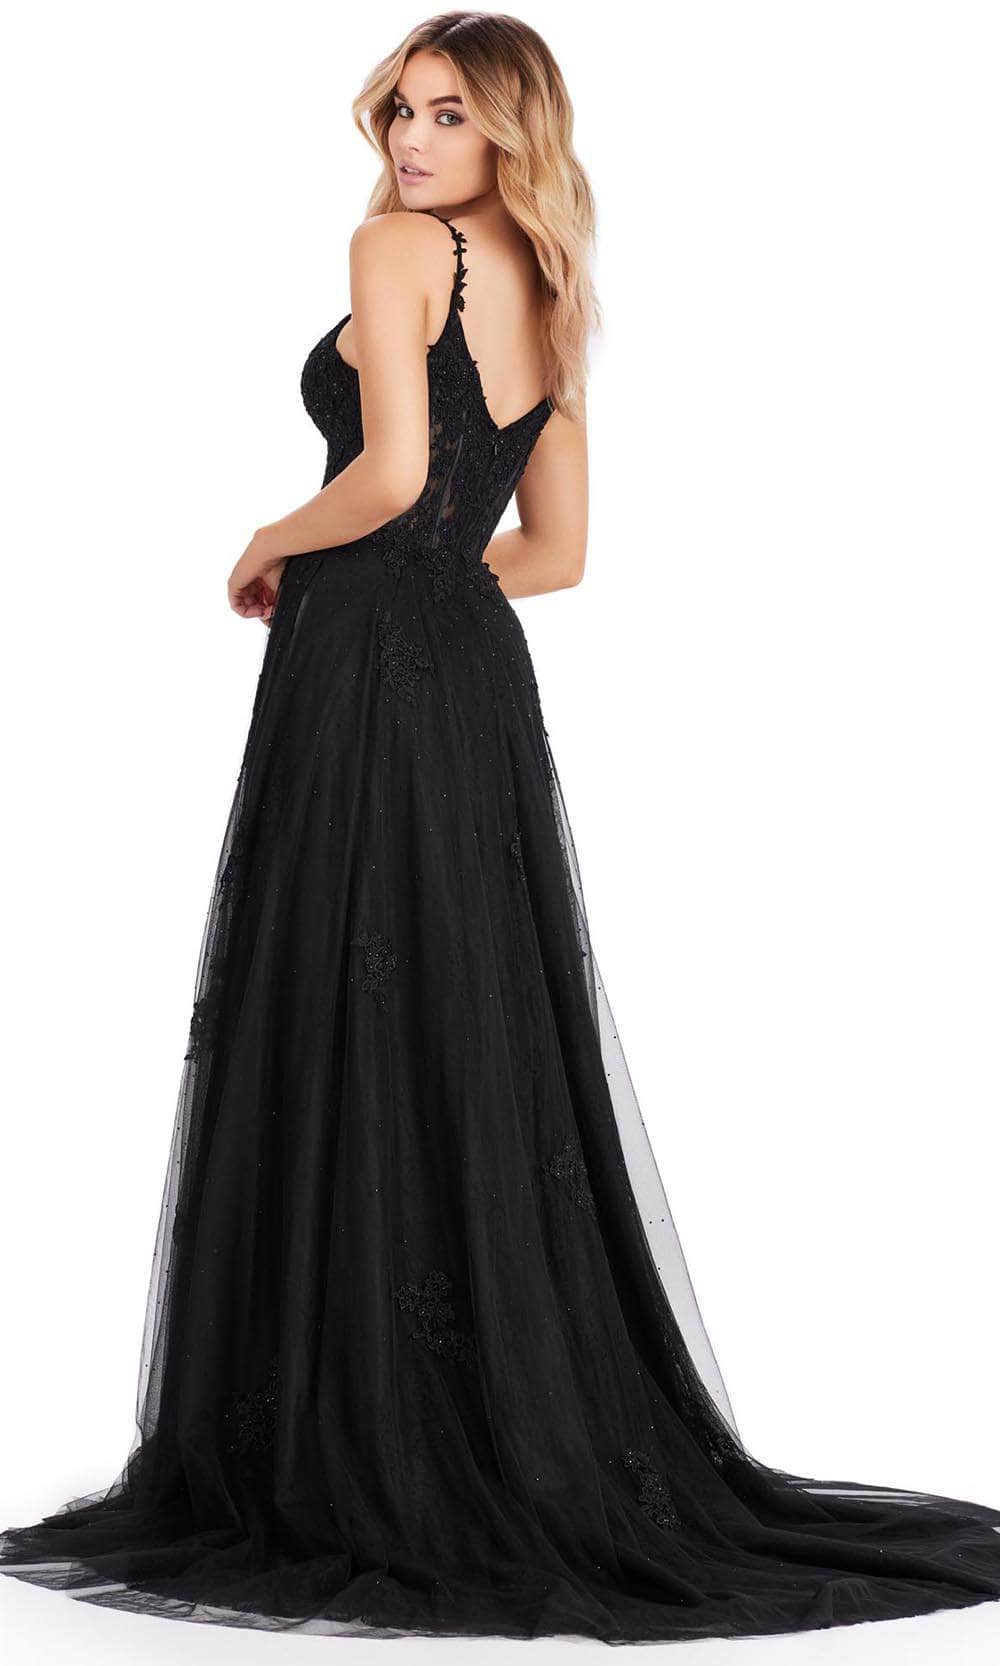 Ashley Lauren 11558 - Sweetheart Applique Prom Dress Prom Dresses